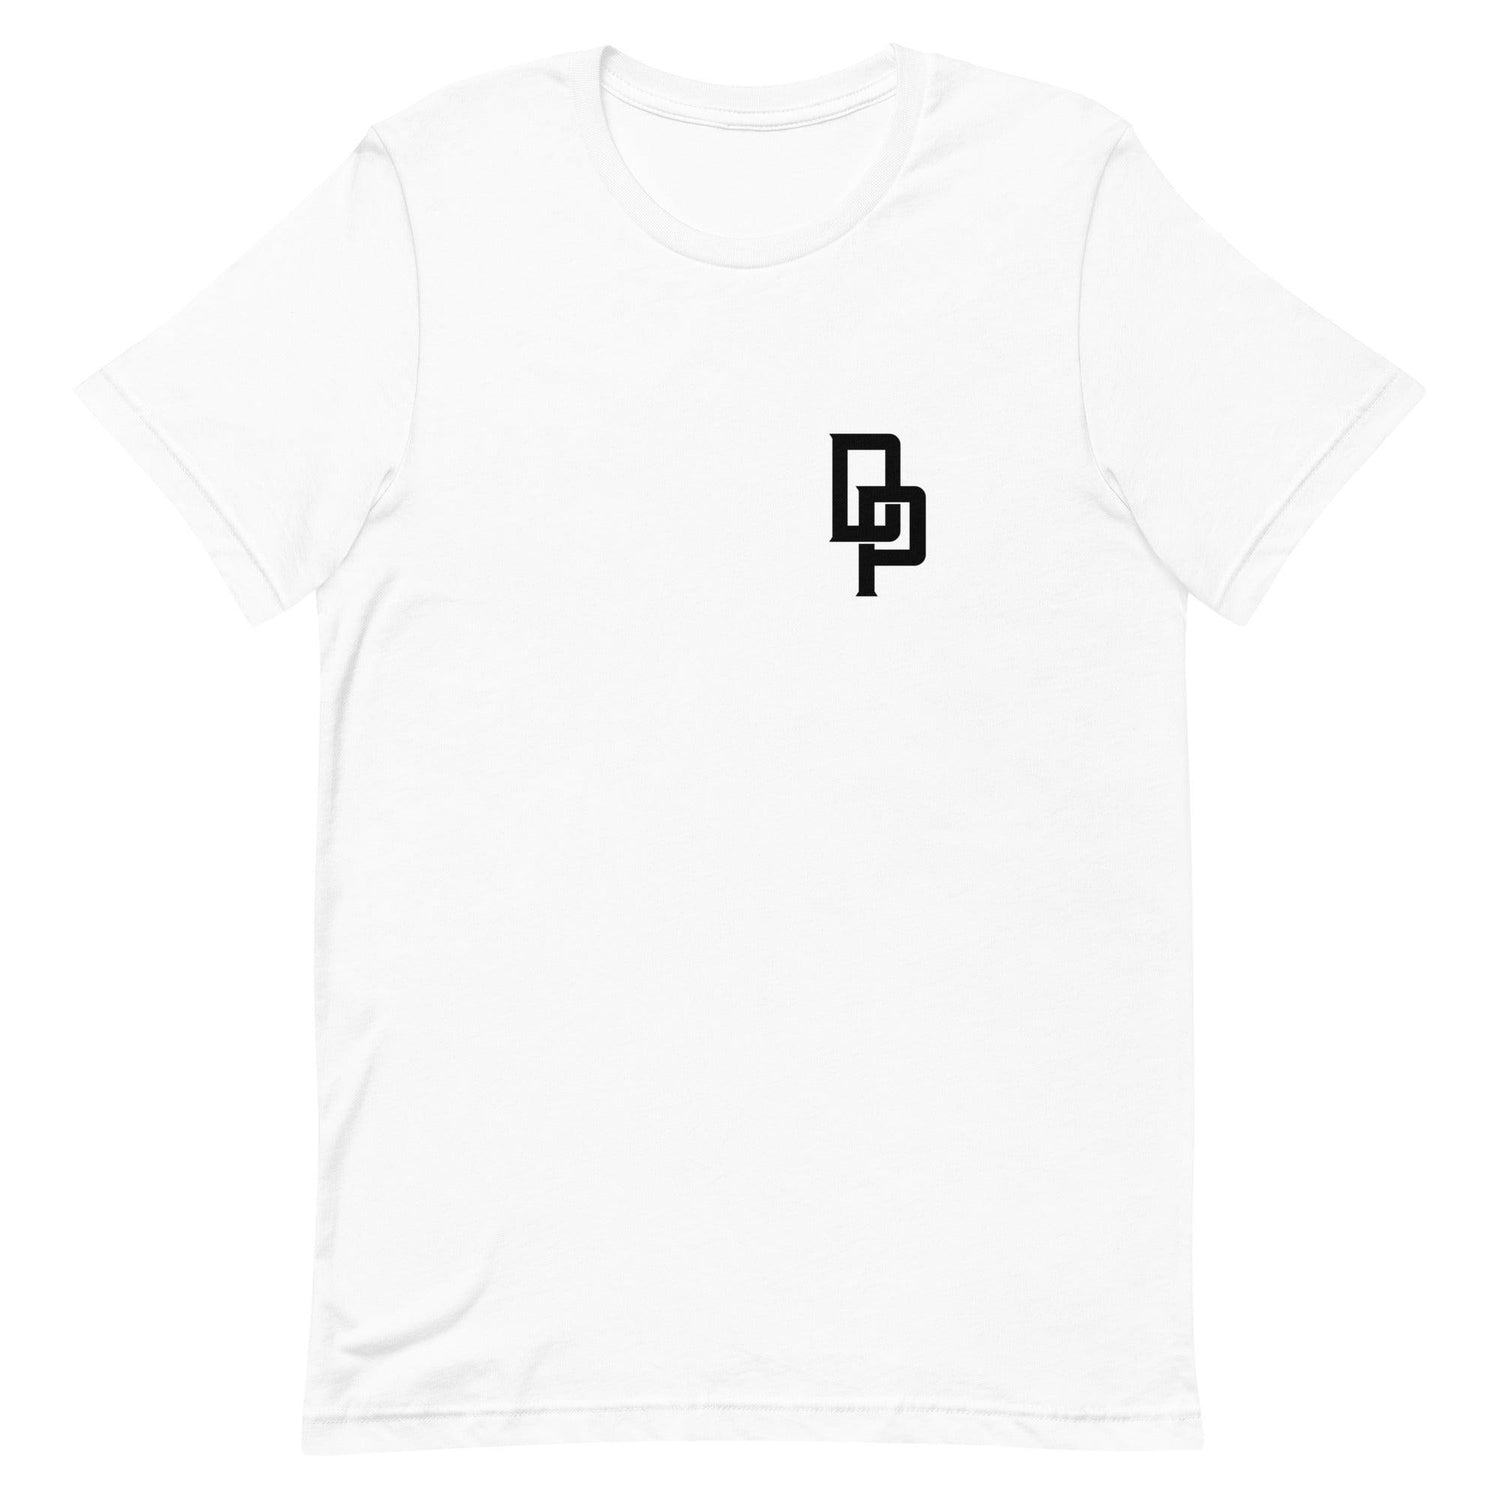 Drake Pierson "Essential" t-shirt - Fan Arch